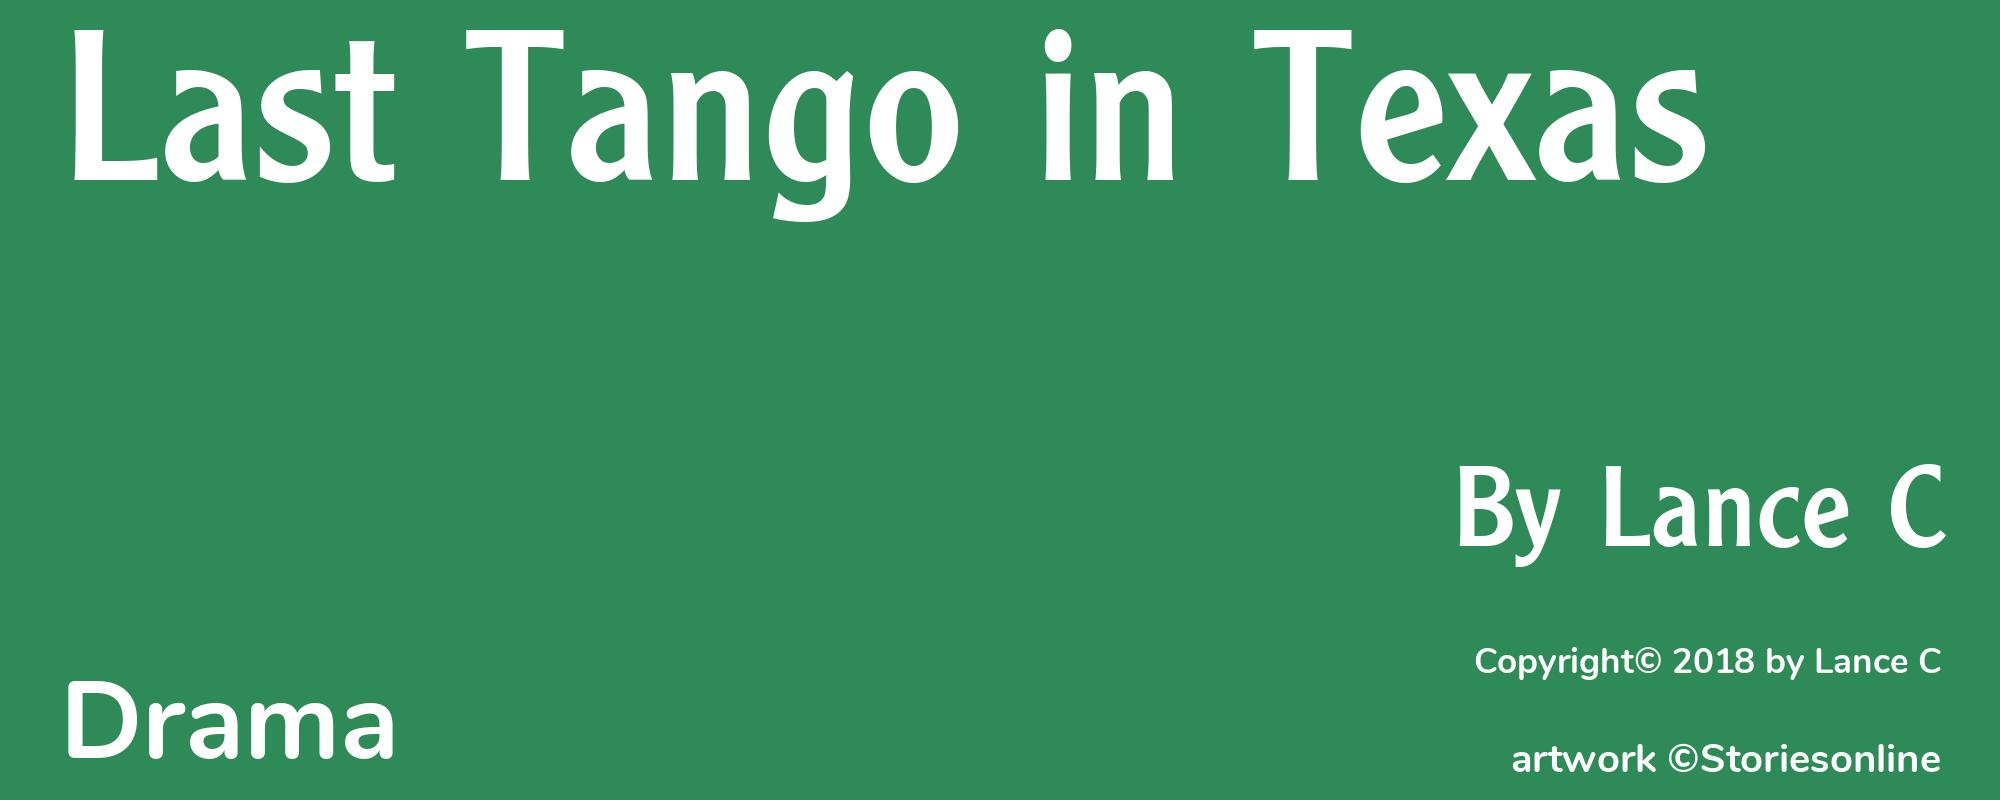 Last Tango in Texas - Cover